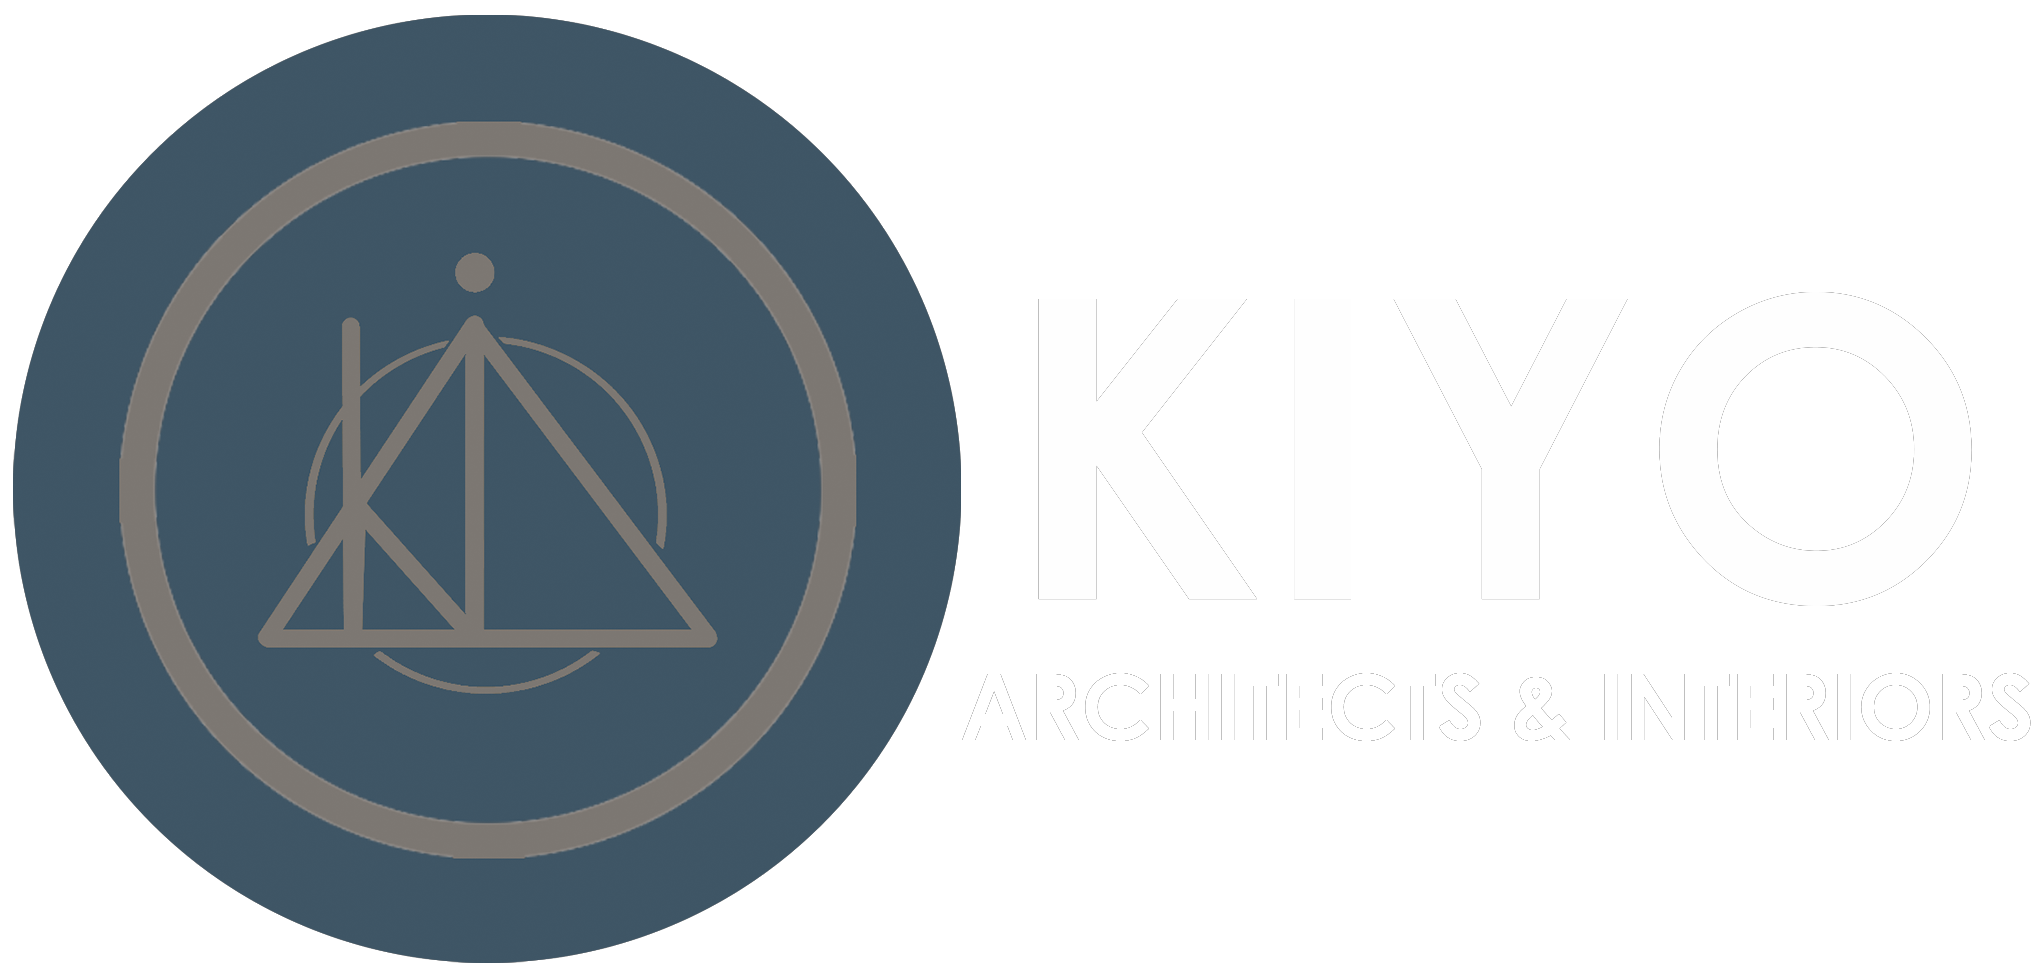 Kiyo logo design